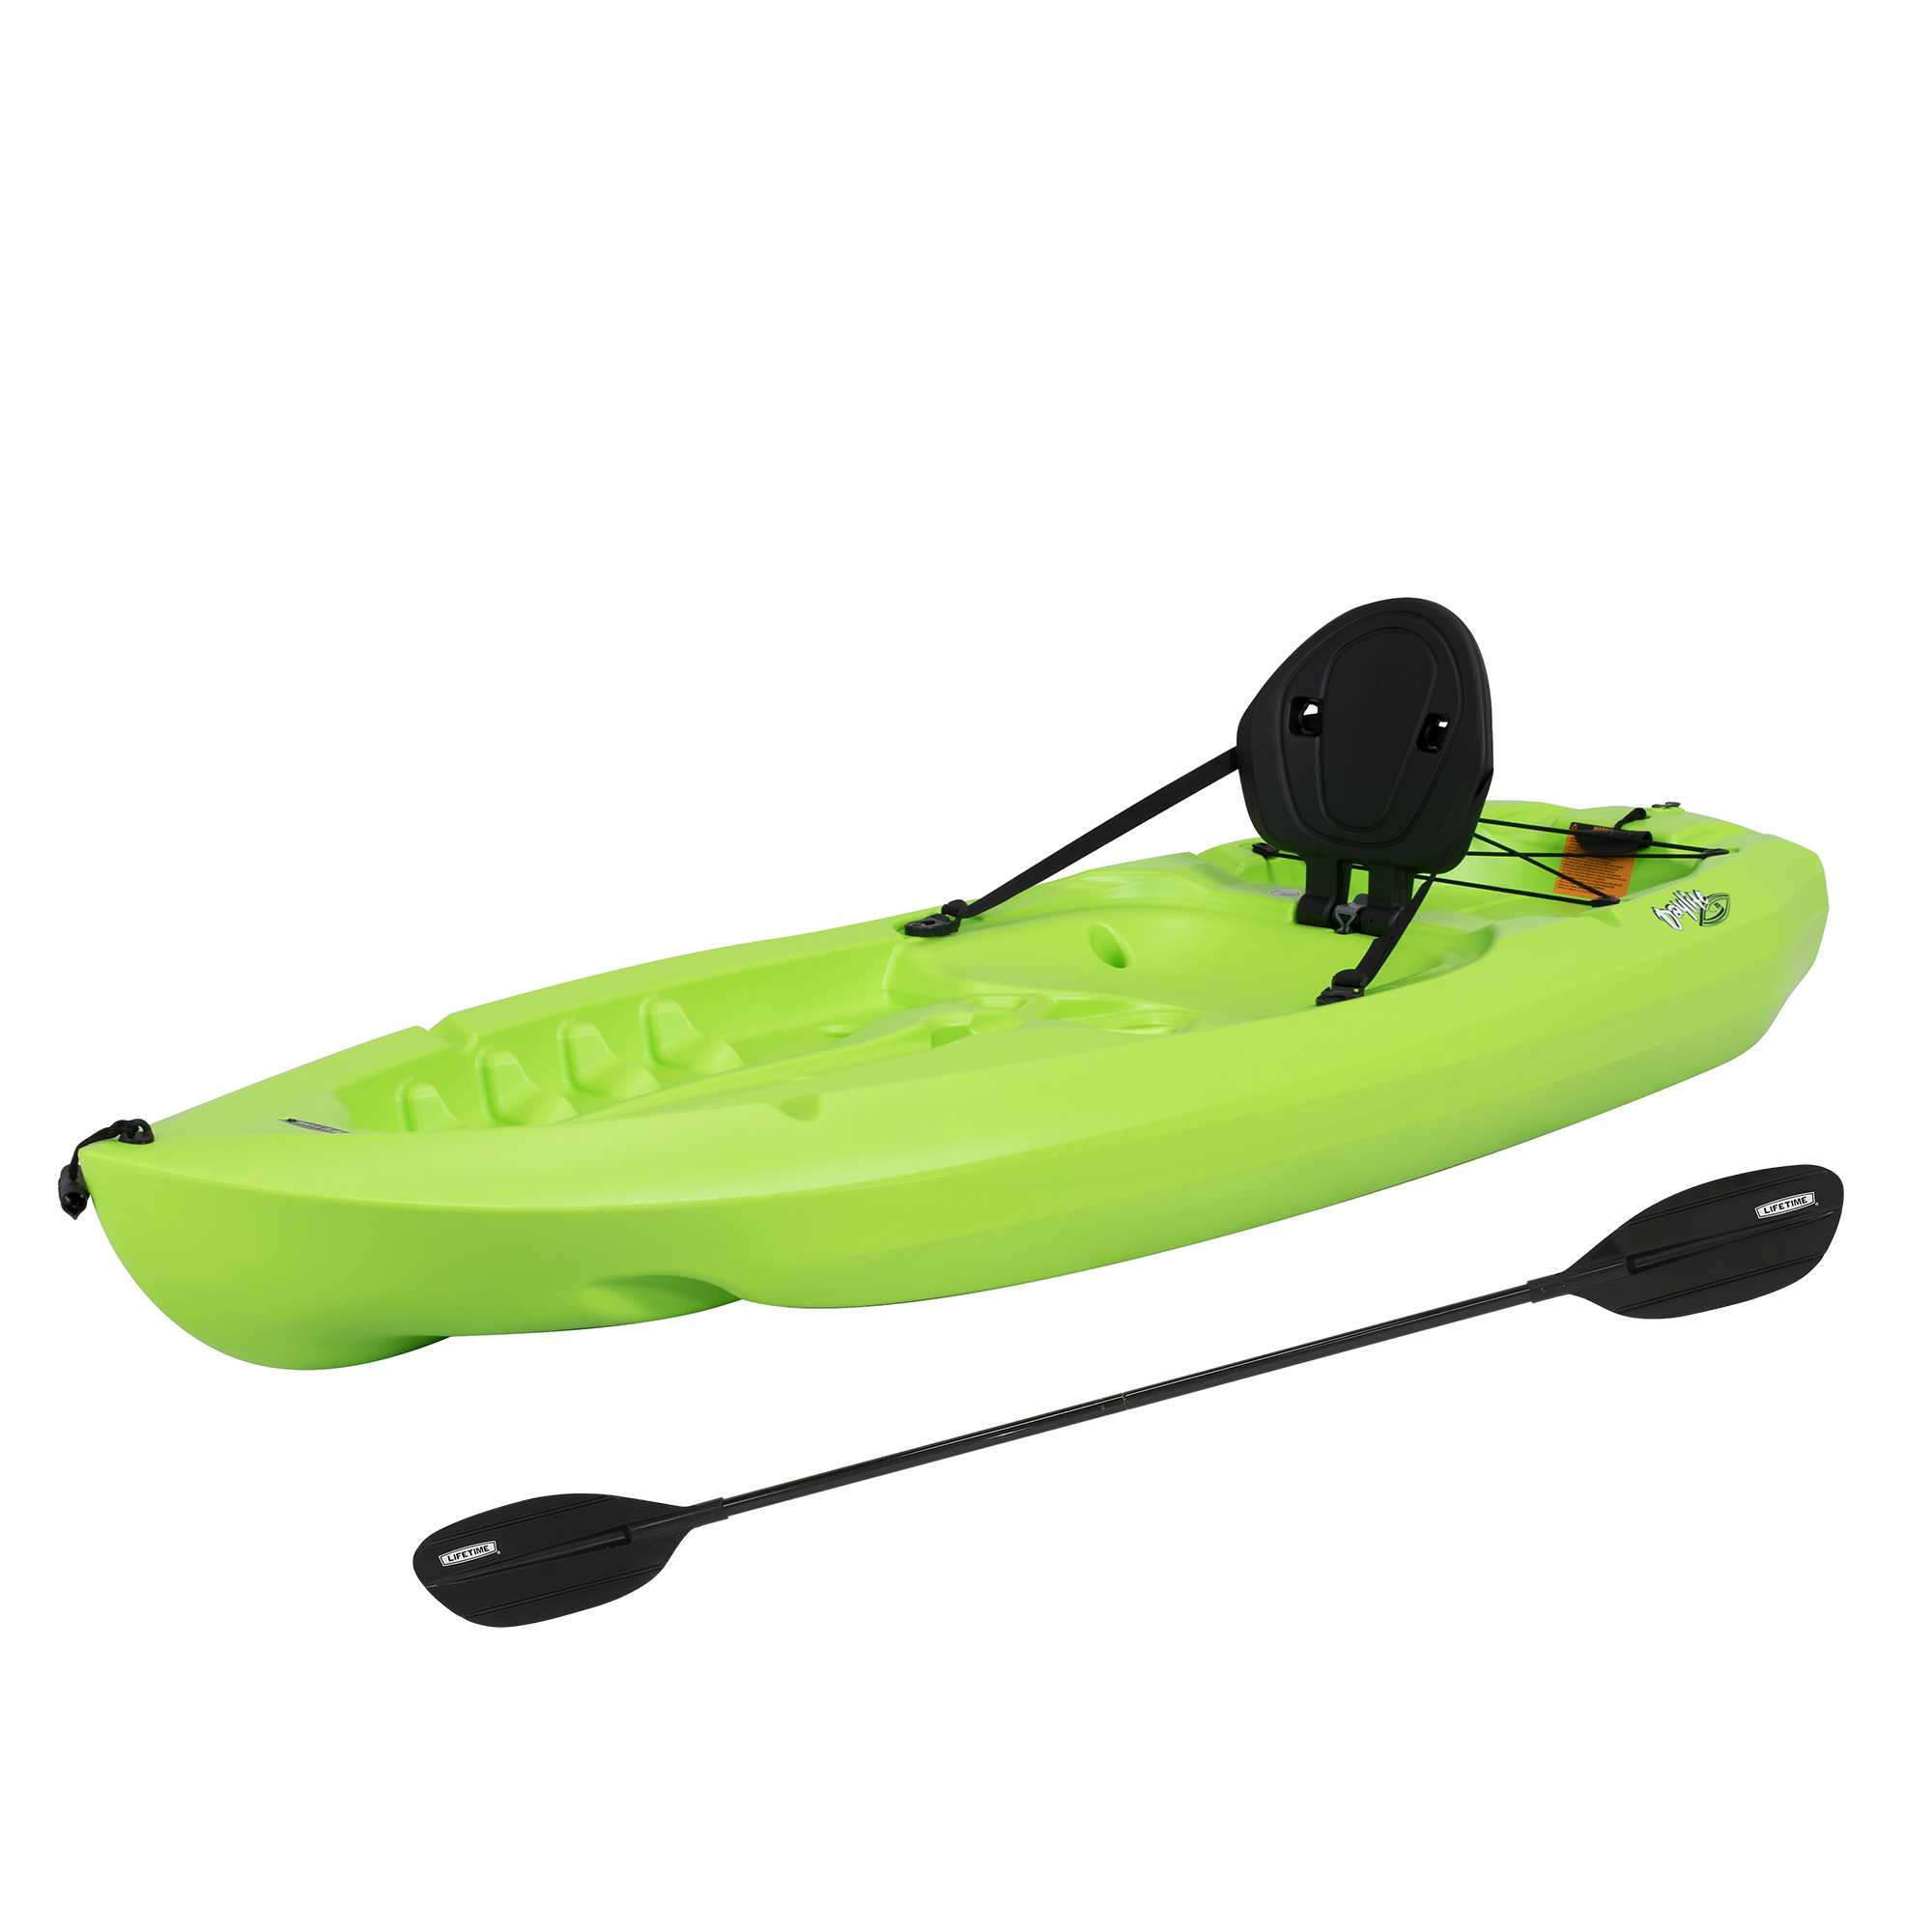 Toda la vida Daylight 80 Sit-On-Top Kayak o Paddle Incluido), 90938 - Real lor: limegreen-081483818269-0